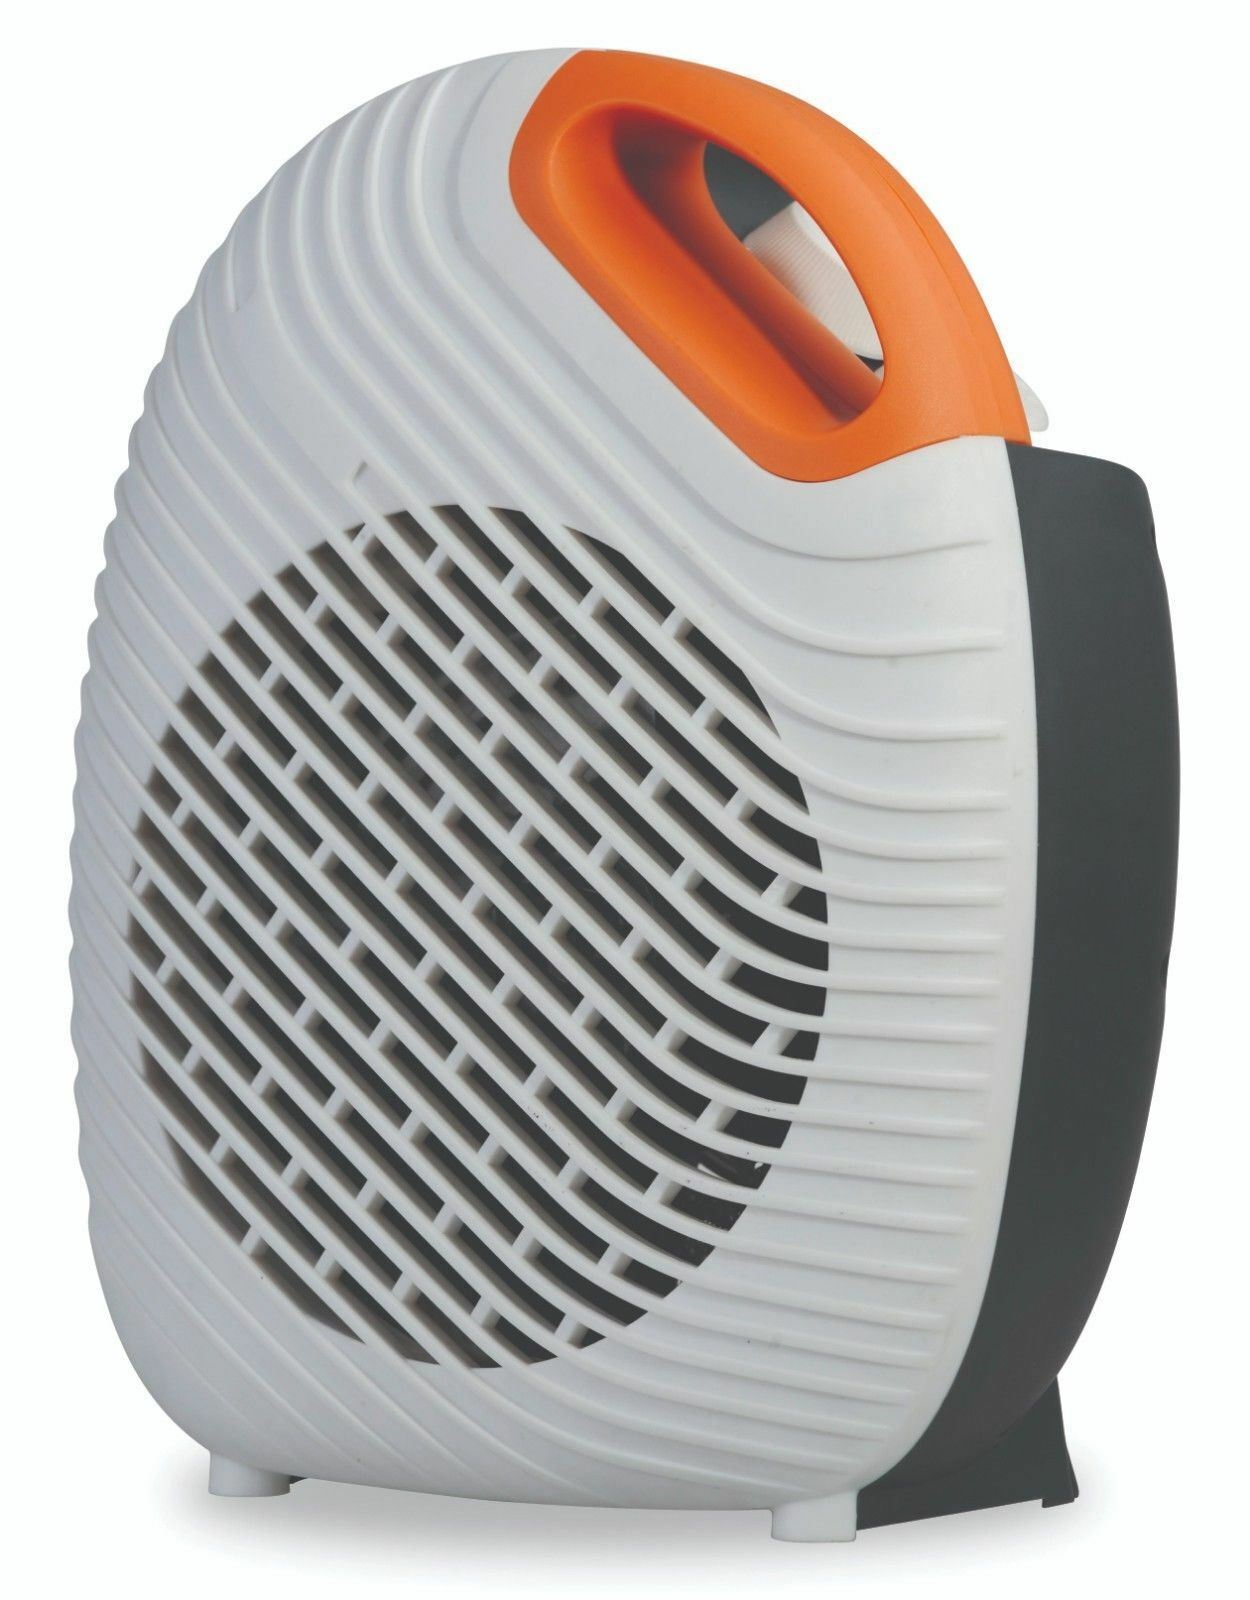 Kingavon 2kw Portable Electric Fan Heater in proportions 1250 X 1600